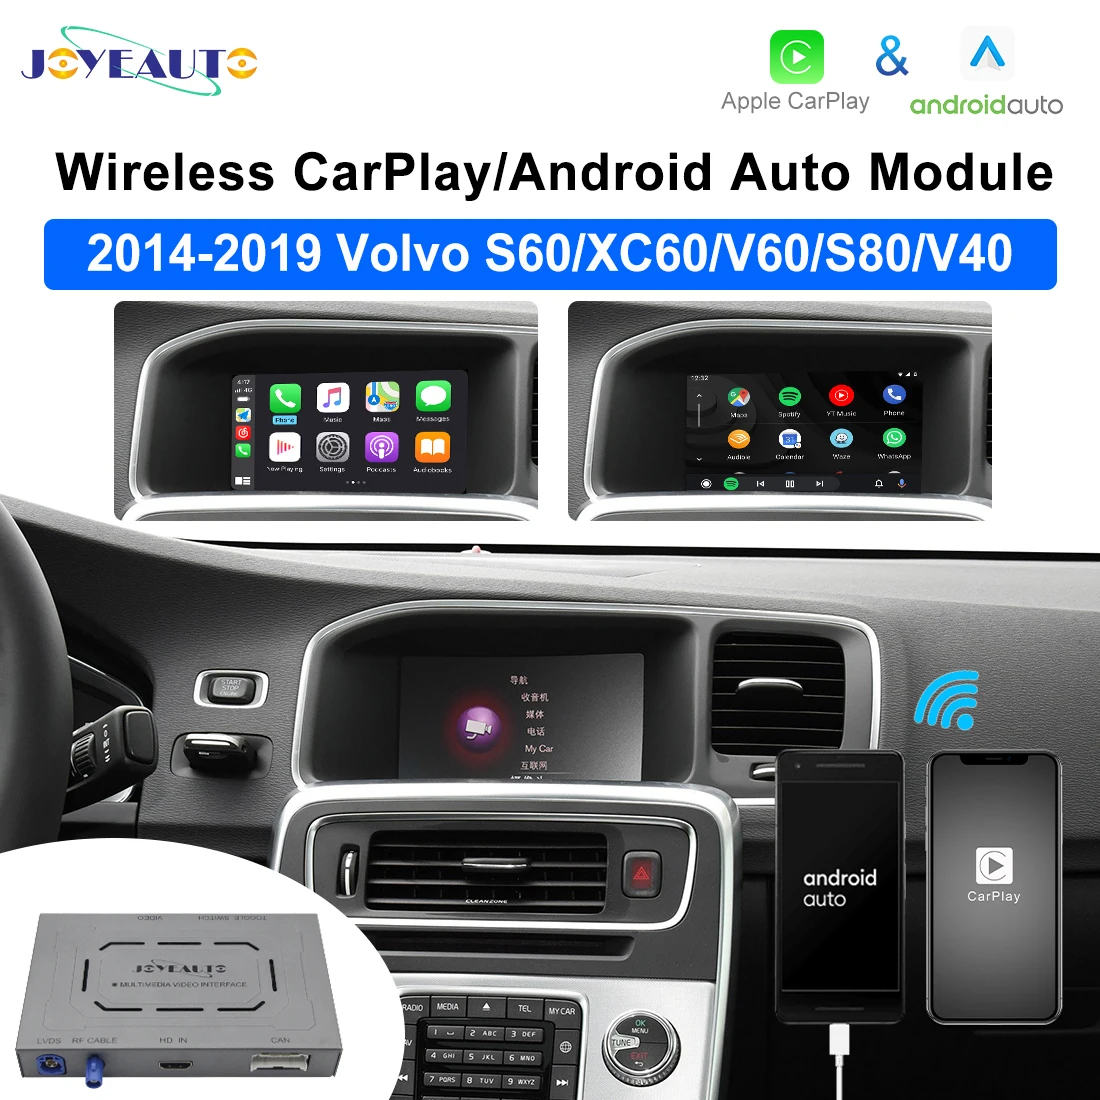 

JoyeAuto Wireless CarPlay for Volvo 2014-2019 S60 XC60 V60 S80 V40 Wireless Android Auto Interface Mirror-Link AirPlay Car Play